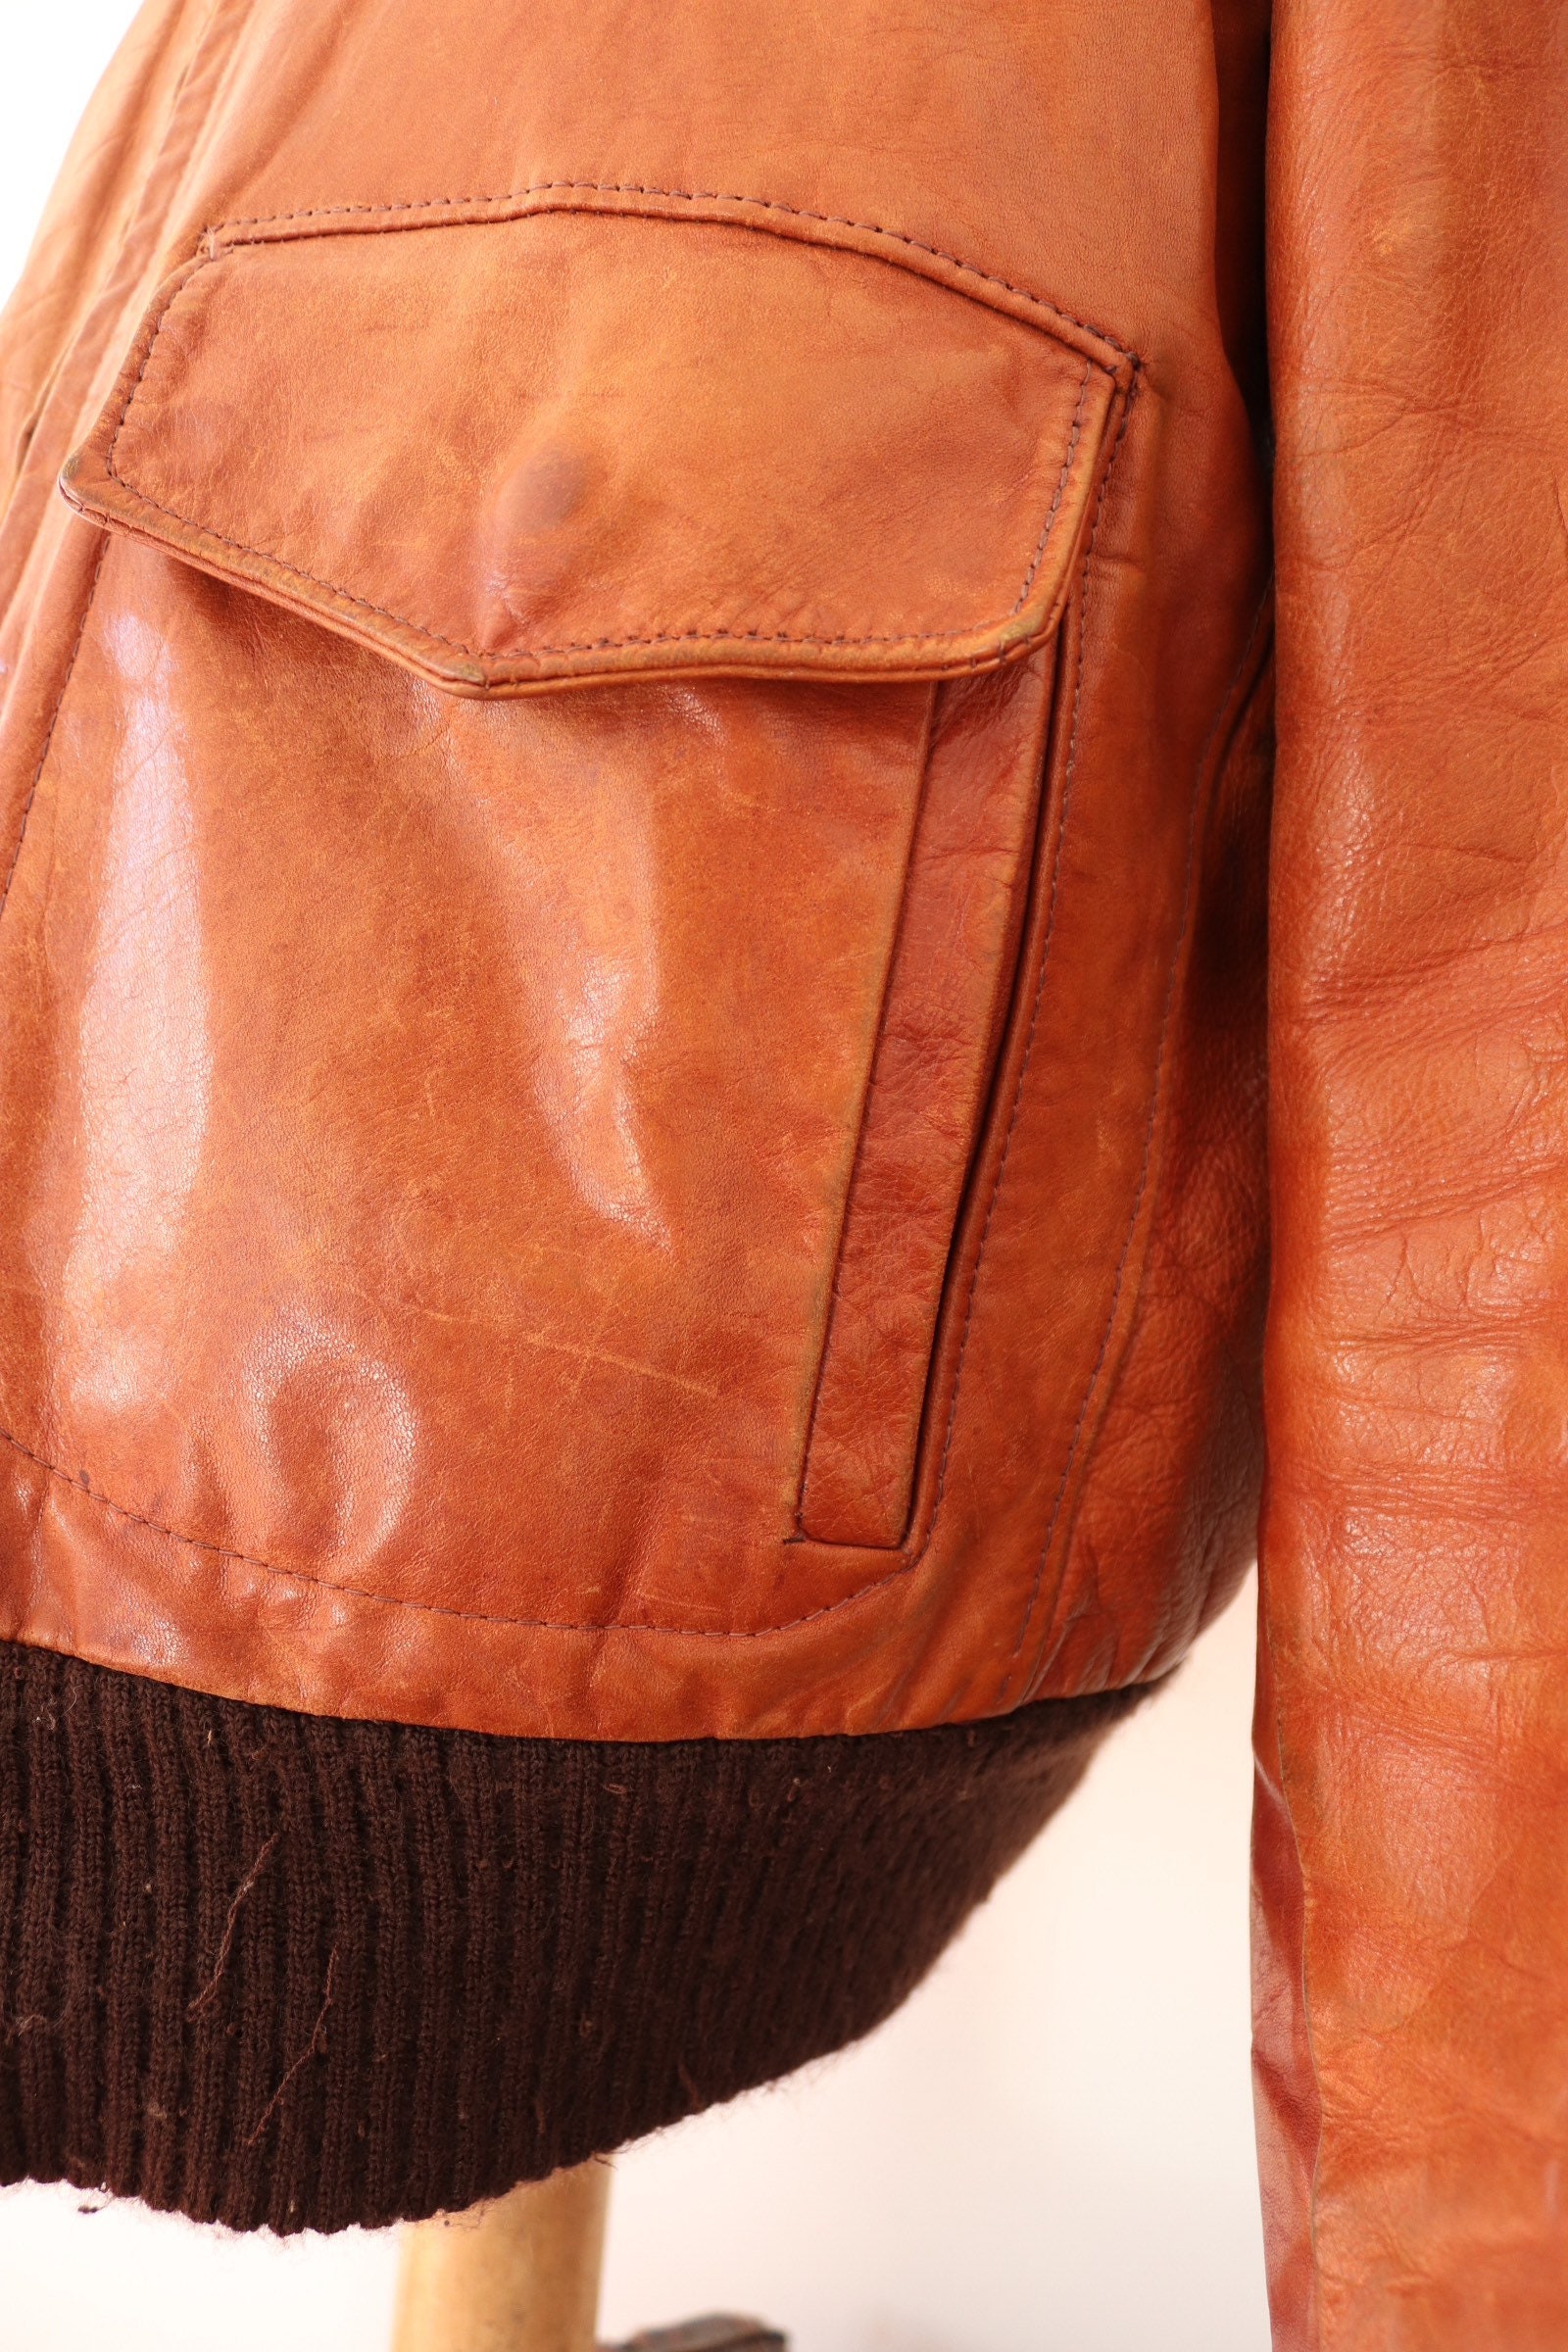 Vintage 1960s 60s tan brown leather bomber jacket Talon zipper 44 chest